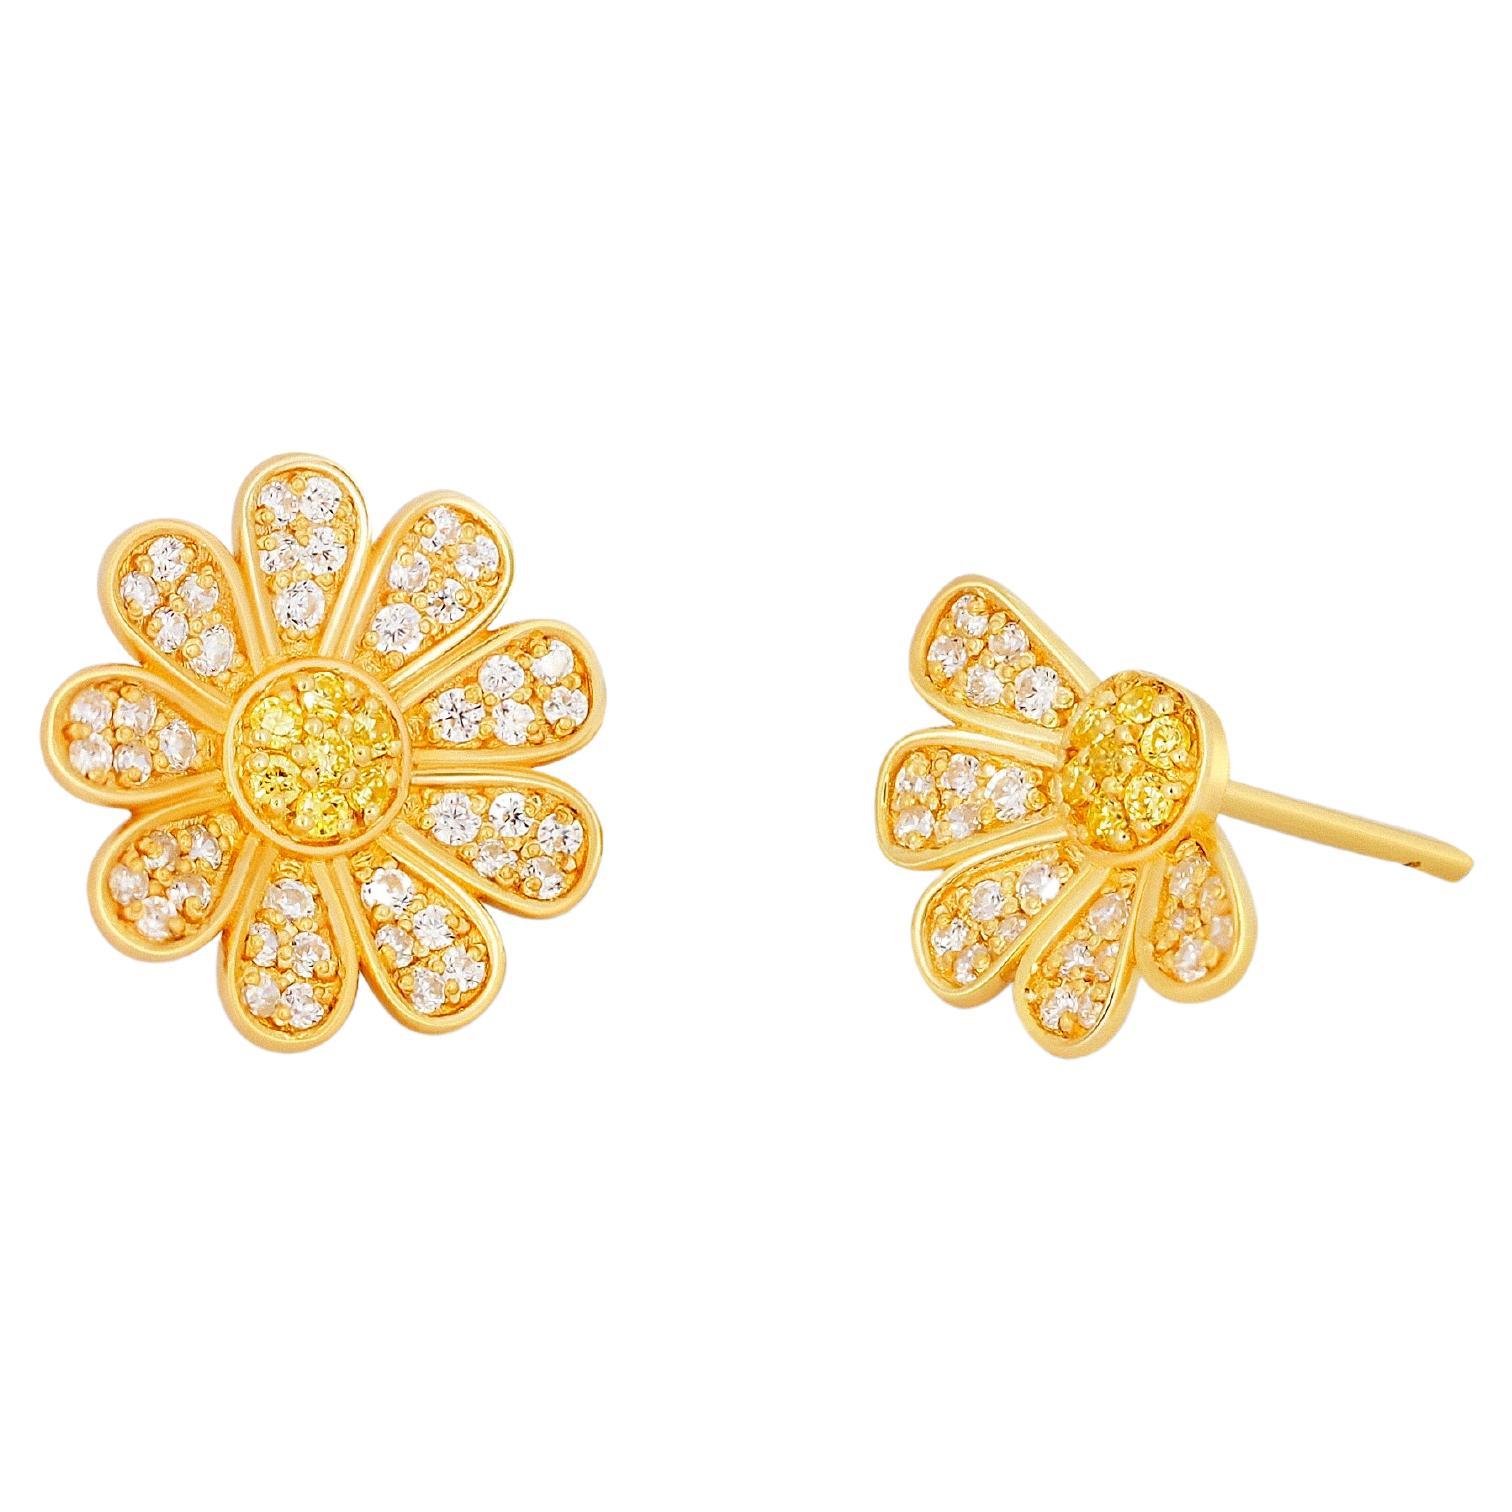 Daisy flower 14k gold earrings studs.  For Sale